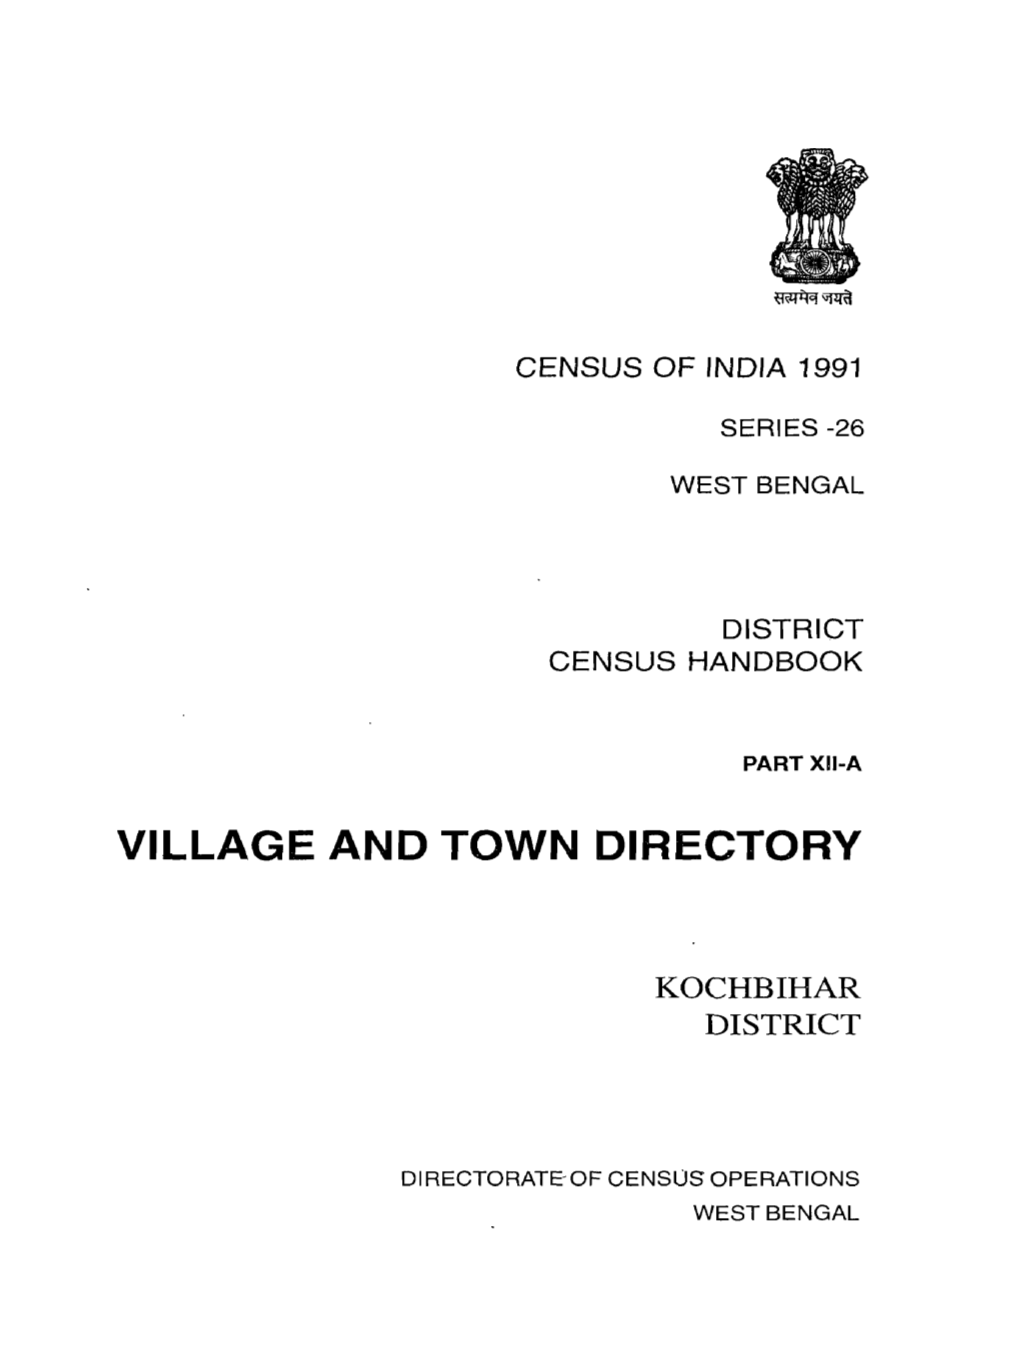 District Census Handbook, Kochbihar, Village & Townwise